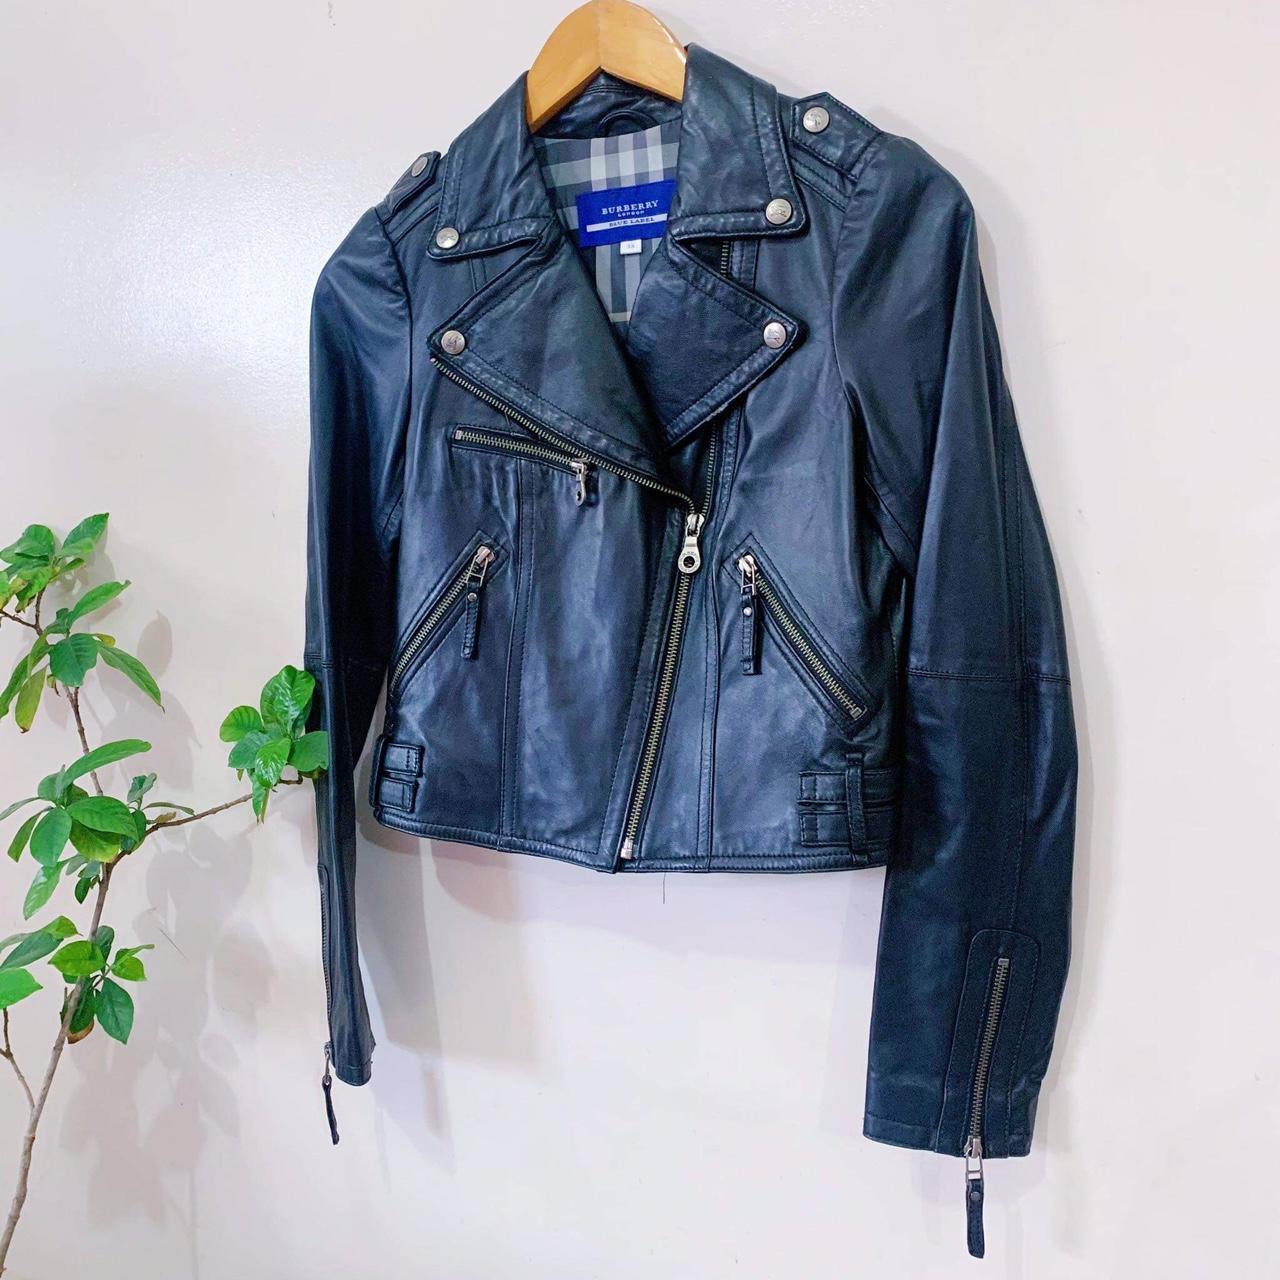 Authentic Vintage Burberry Leather Jacket CONDITION... - Depop